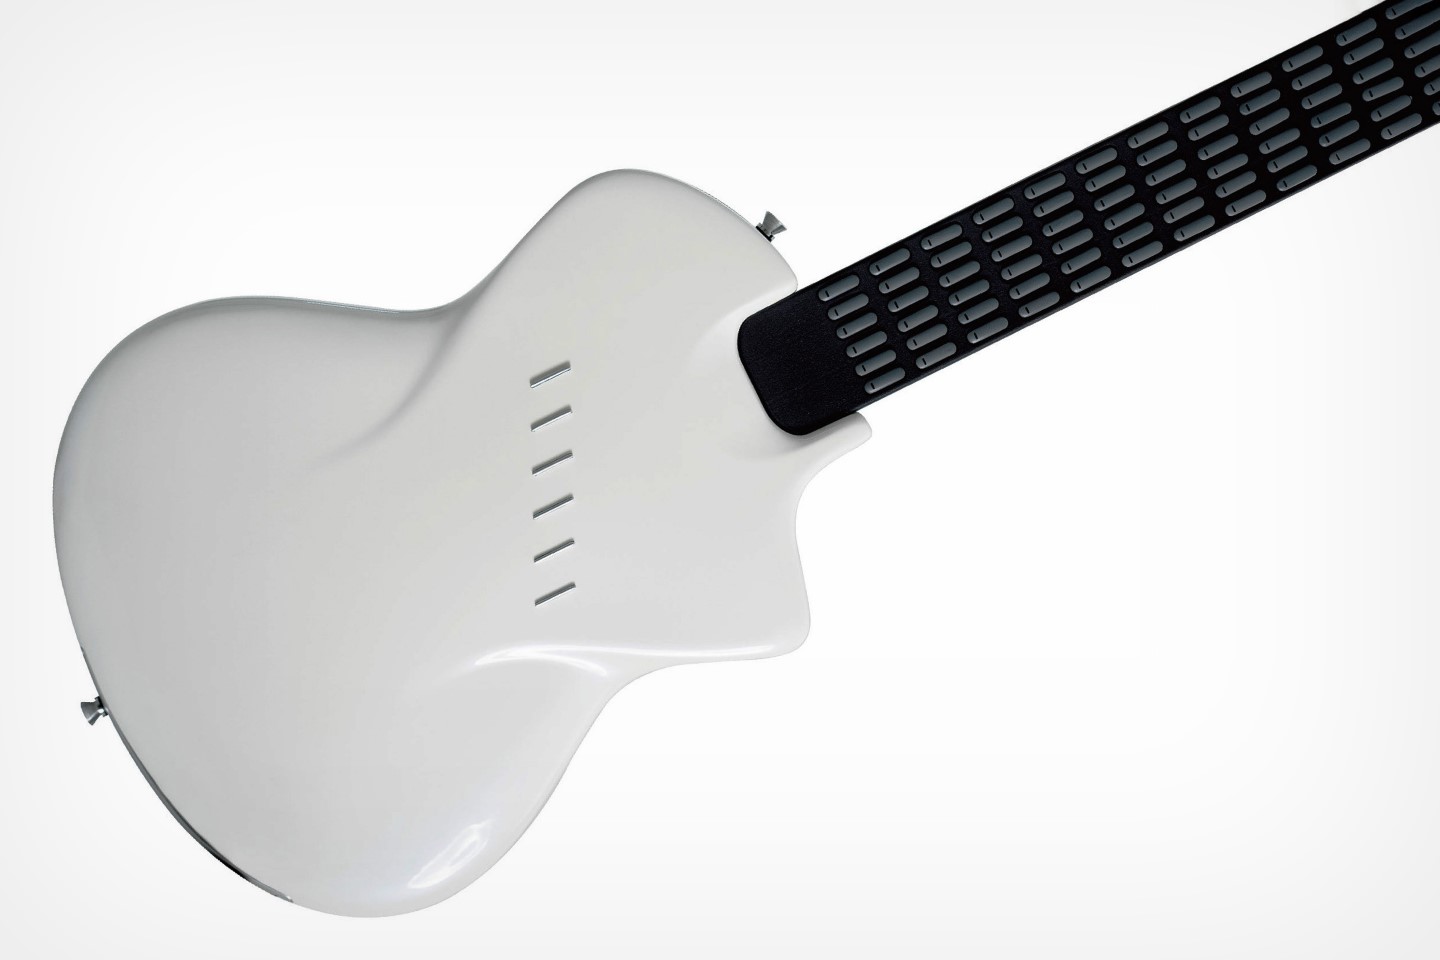 Move over Guitar Hero, this MIDI Controller Electric Guitar teaches you